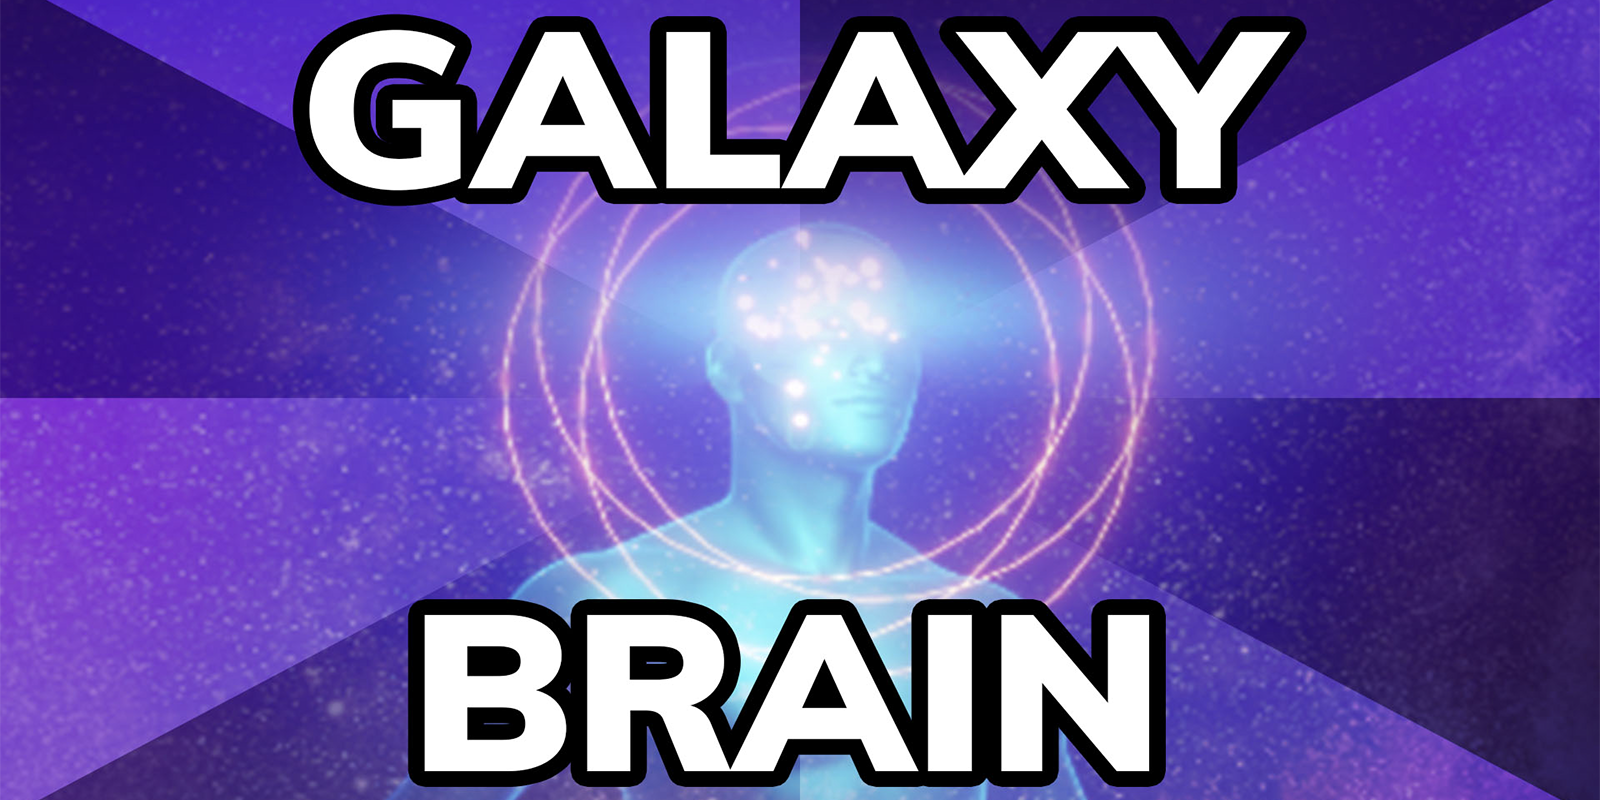 galaxy brain meme on a purple background